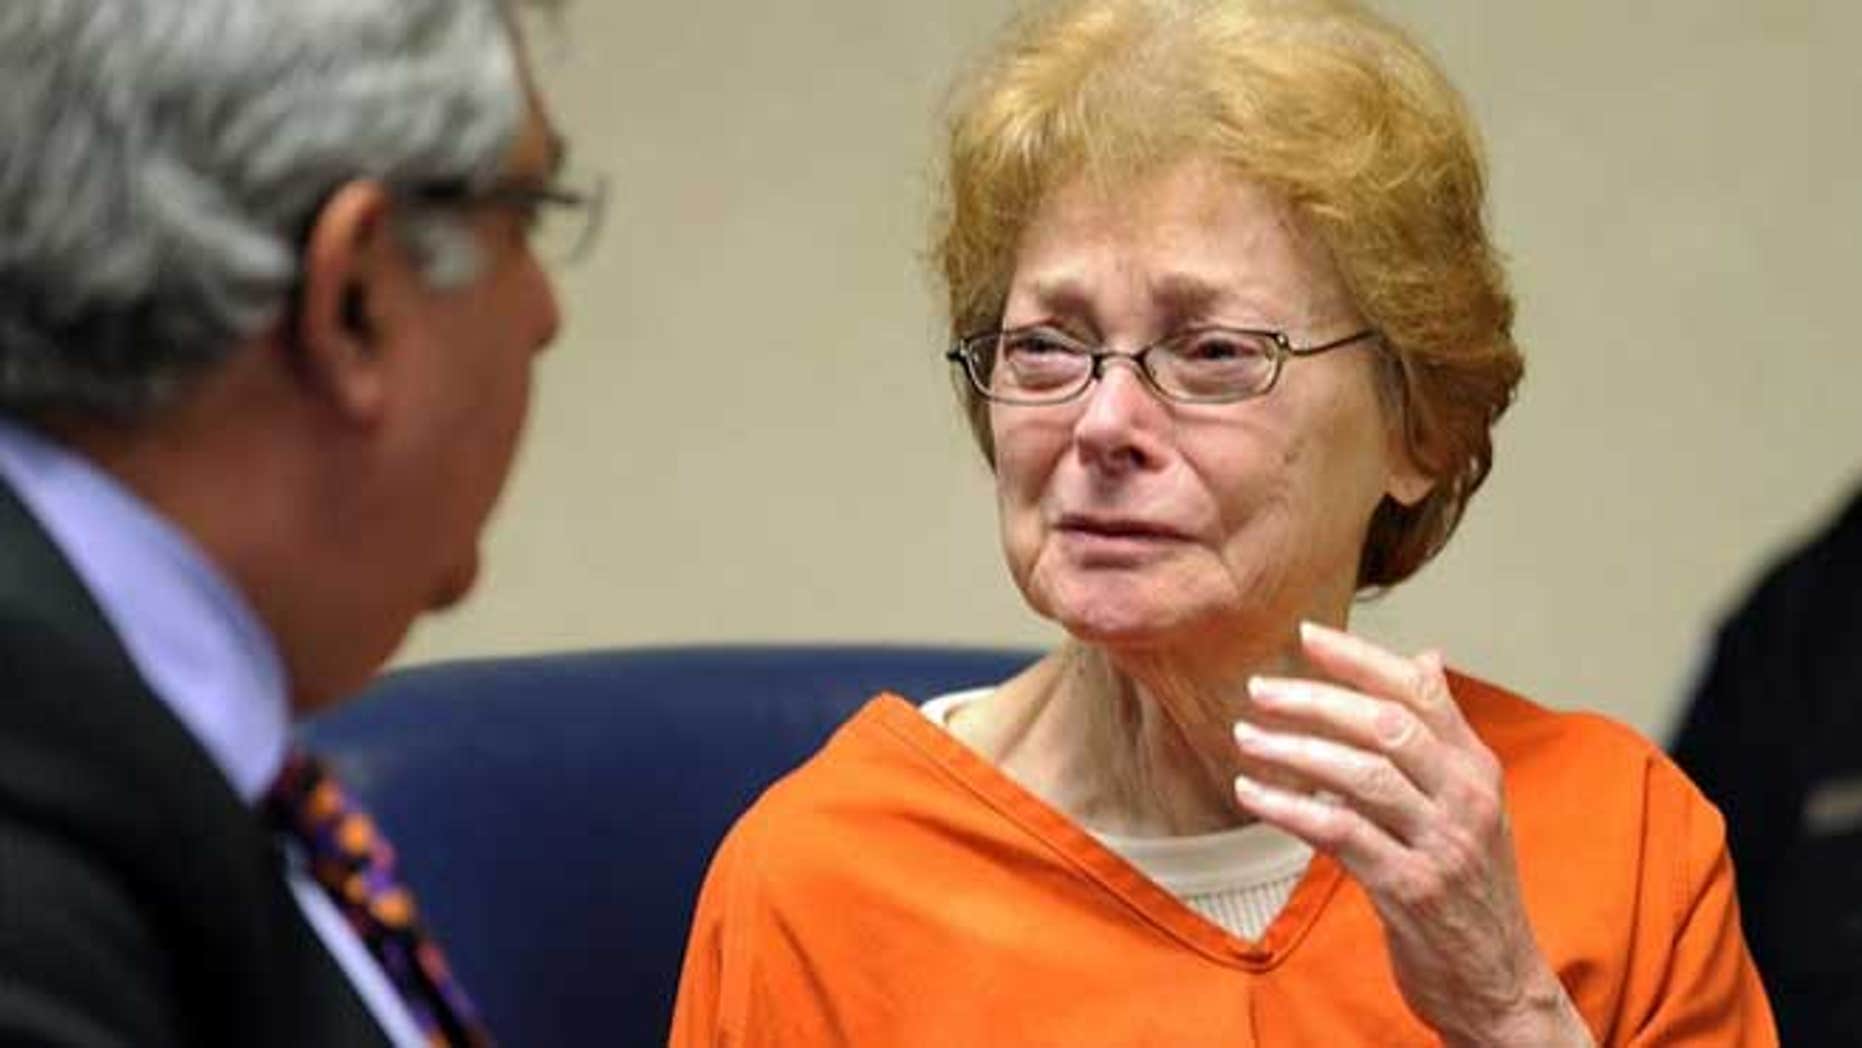 Michigan grandma to be tried in killing teenage grandson